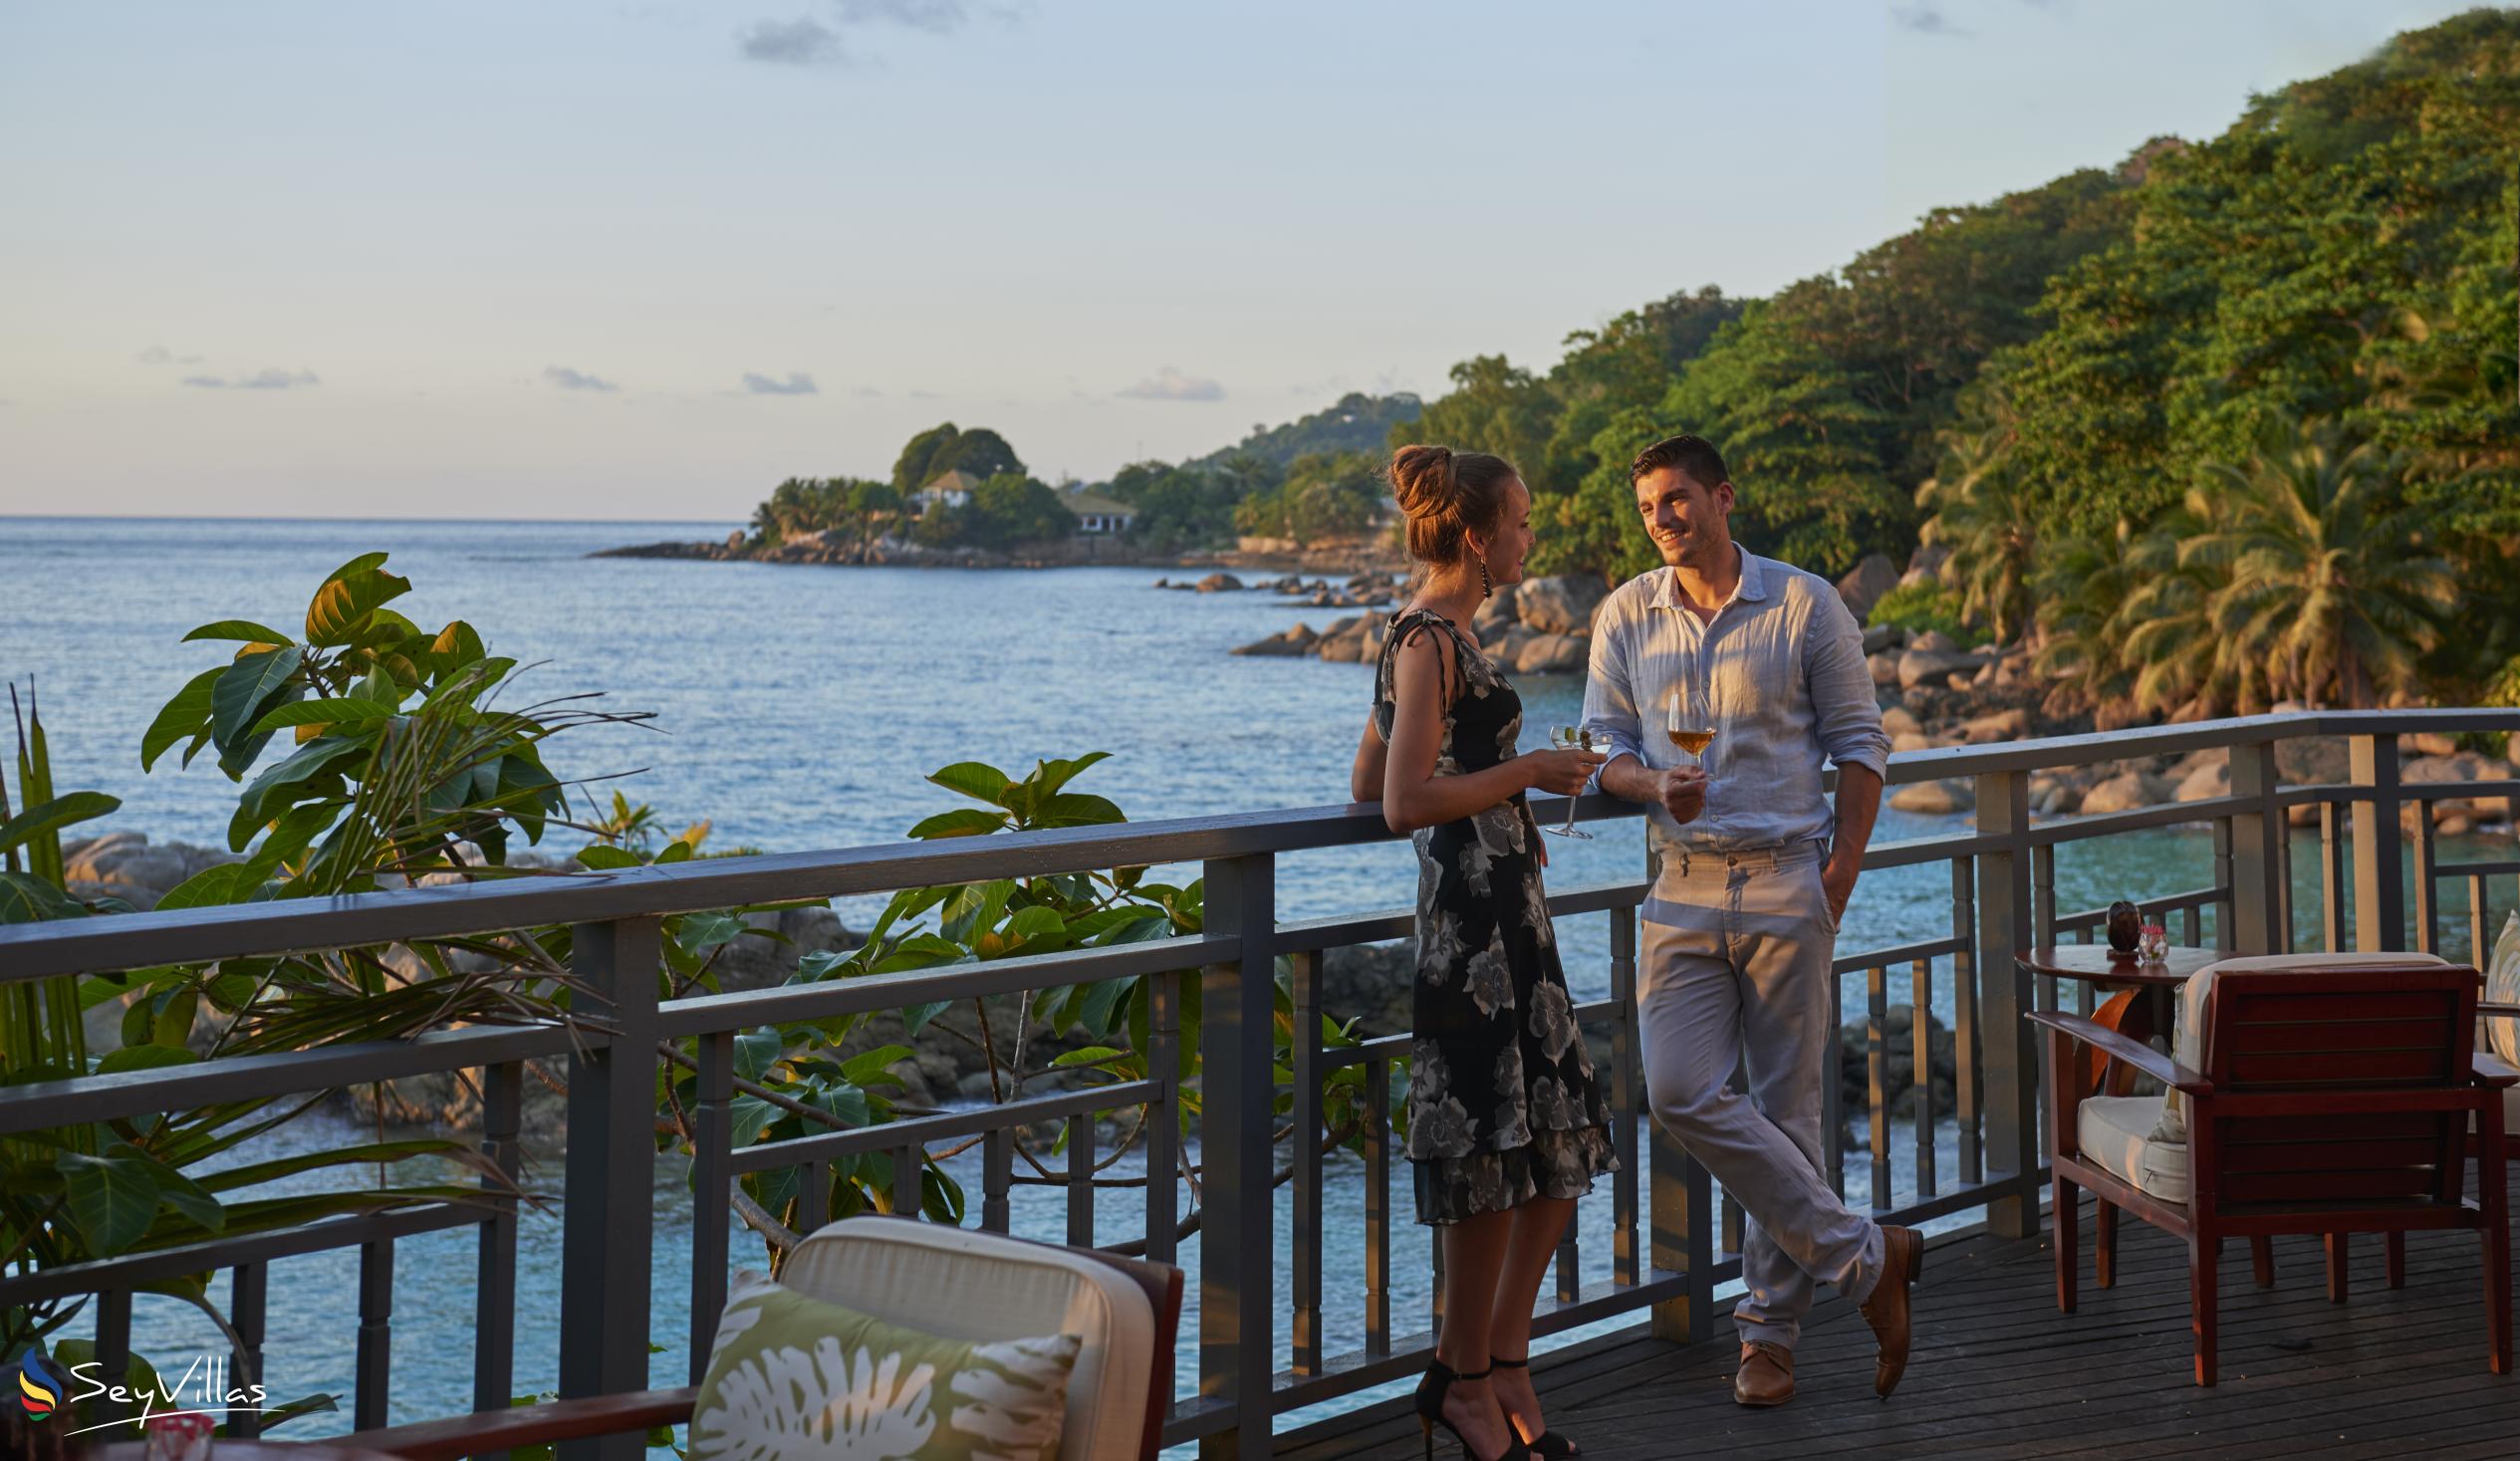 Photo 102: Hilton Seychelles Northolme Resort & Spa - Outdoor area - Mahé (Seychelles)